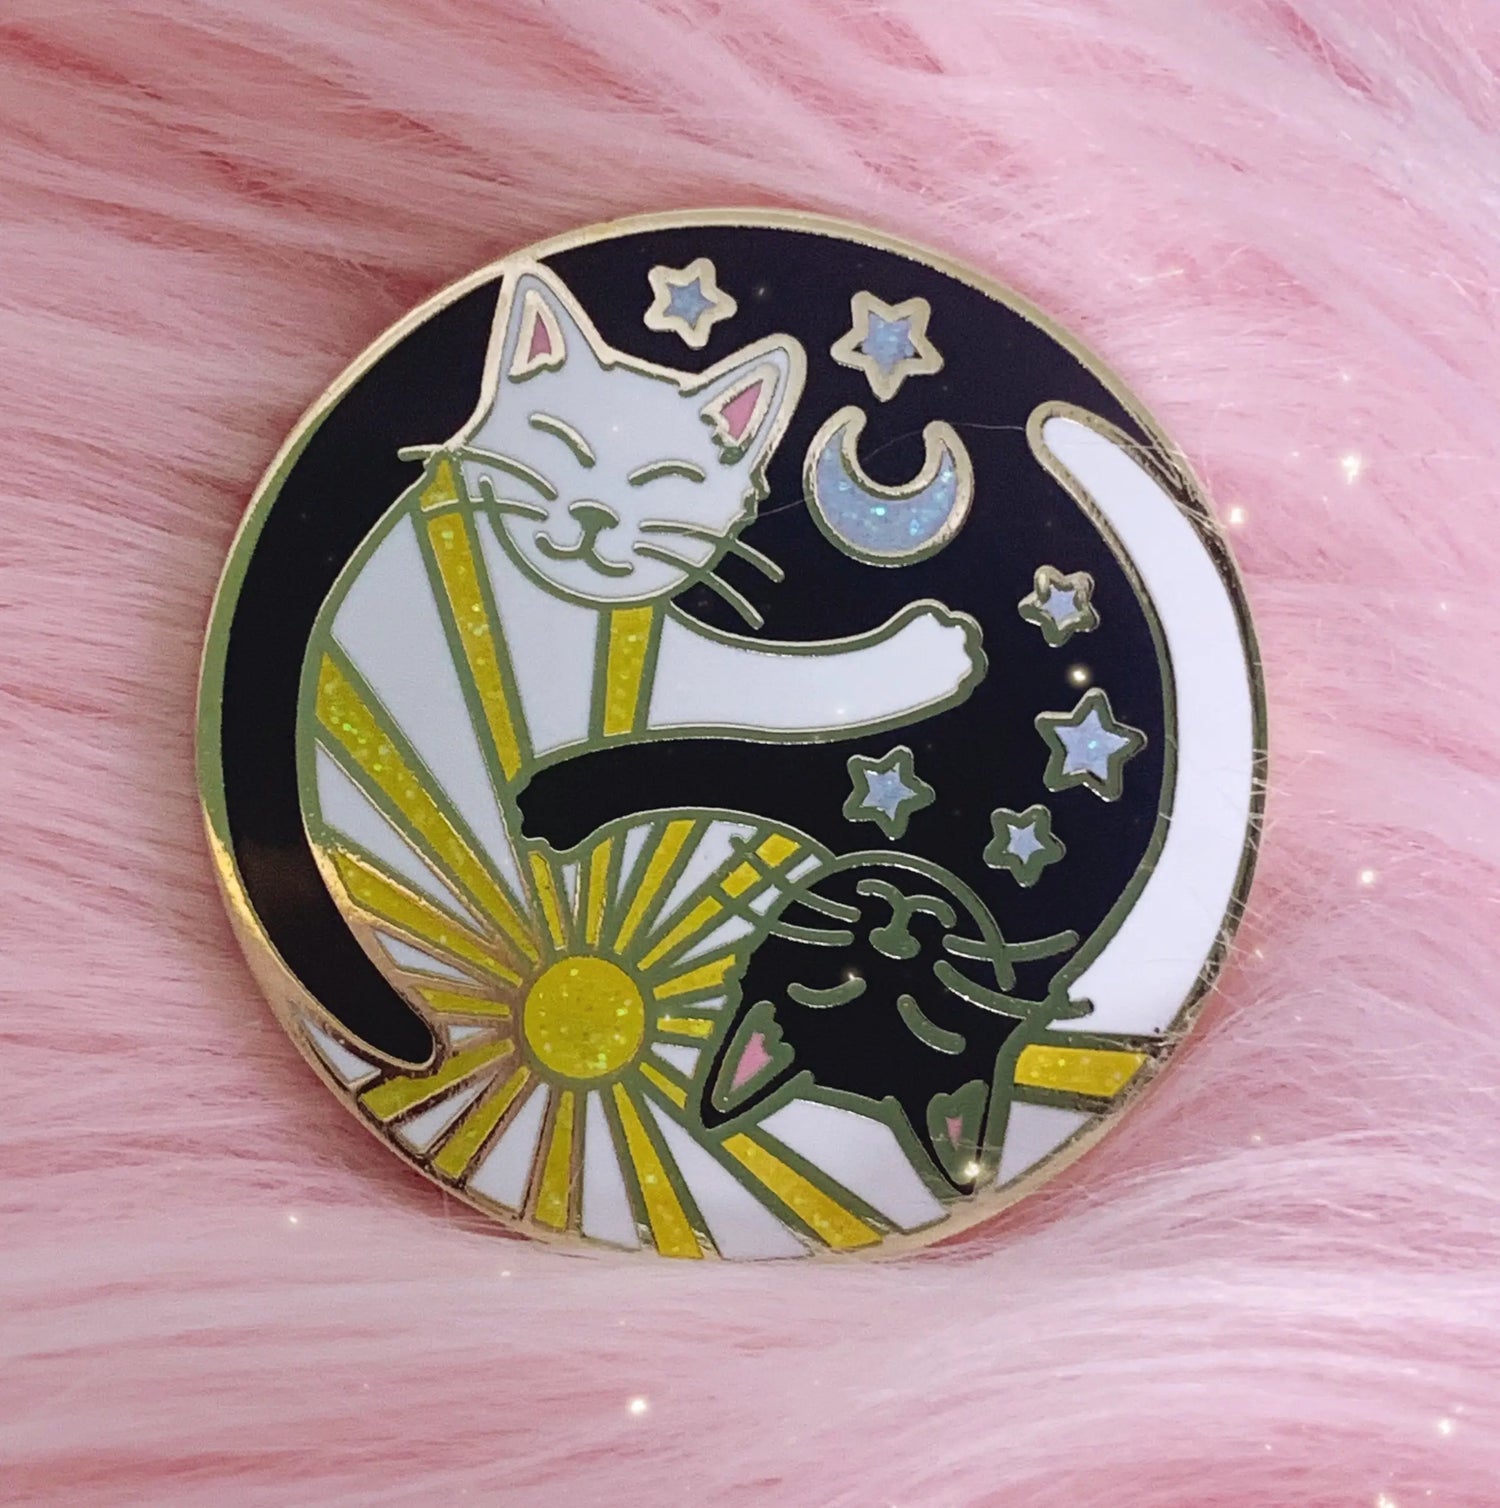 Yin Yang Cats Enamel Pin - Moon Room Shop and Wellness